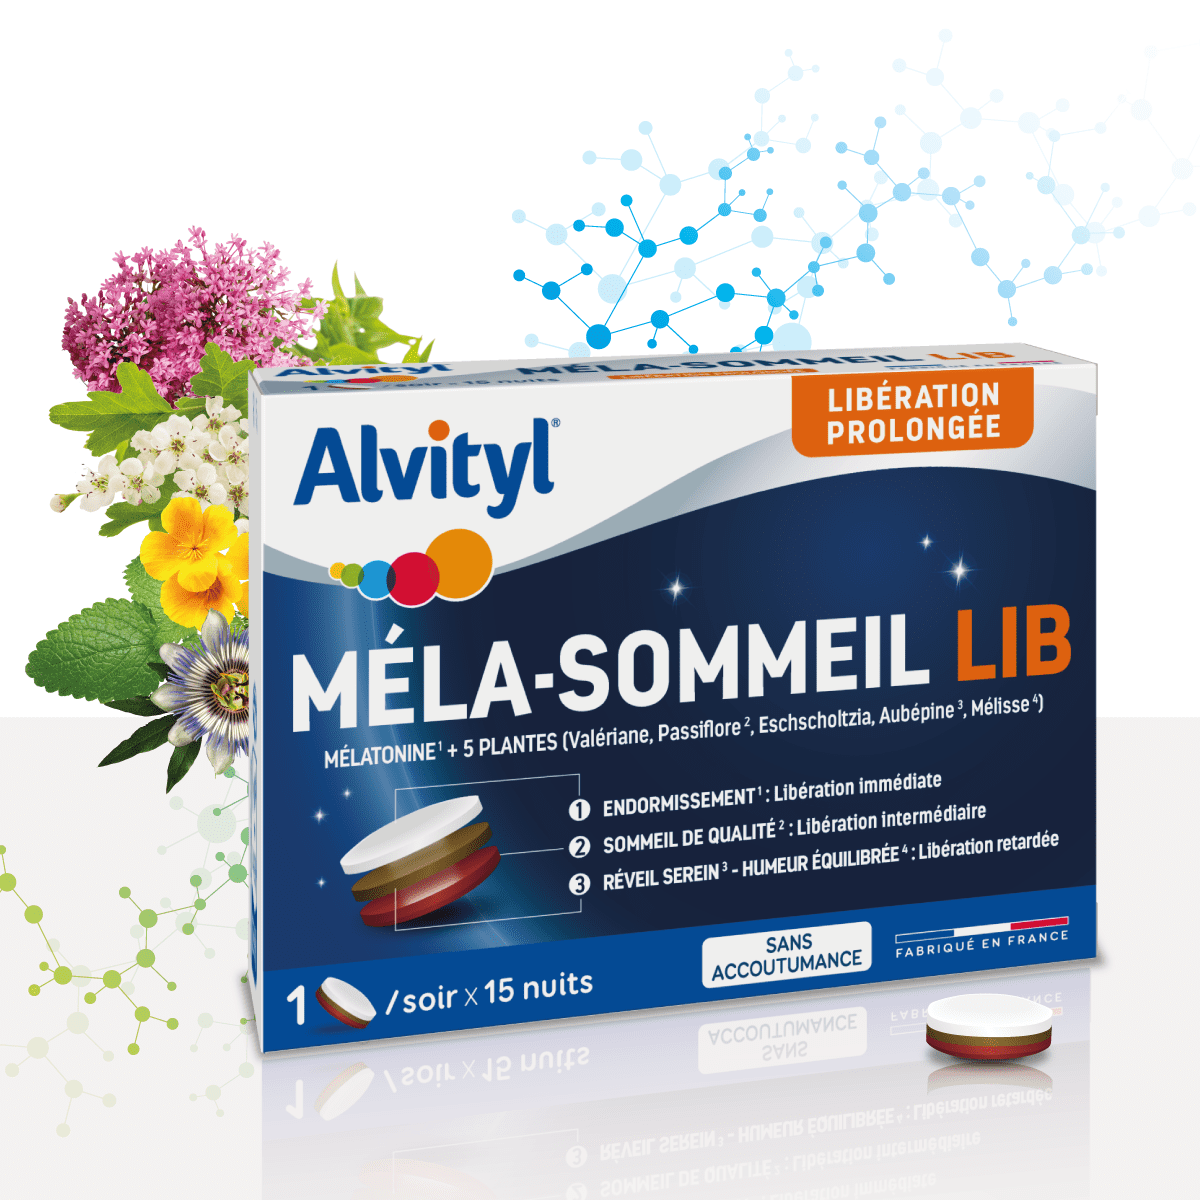 Alvityl mela-sommeil lib melatonine et plantes